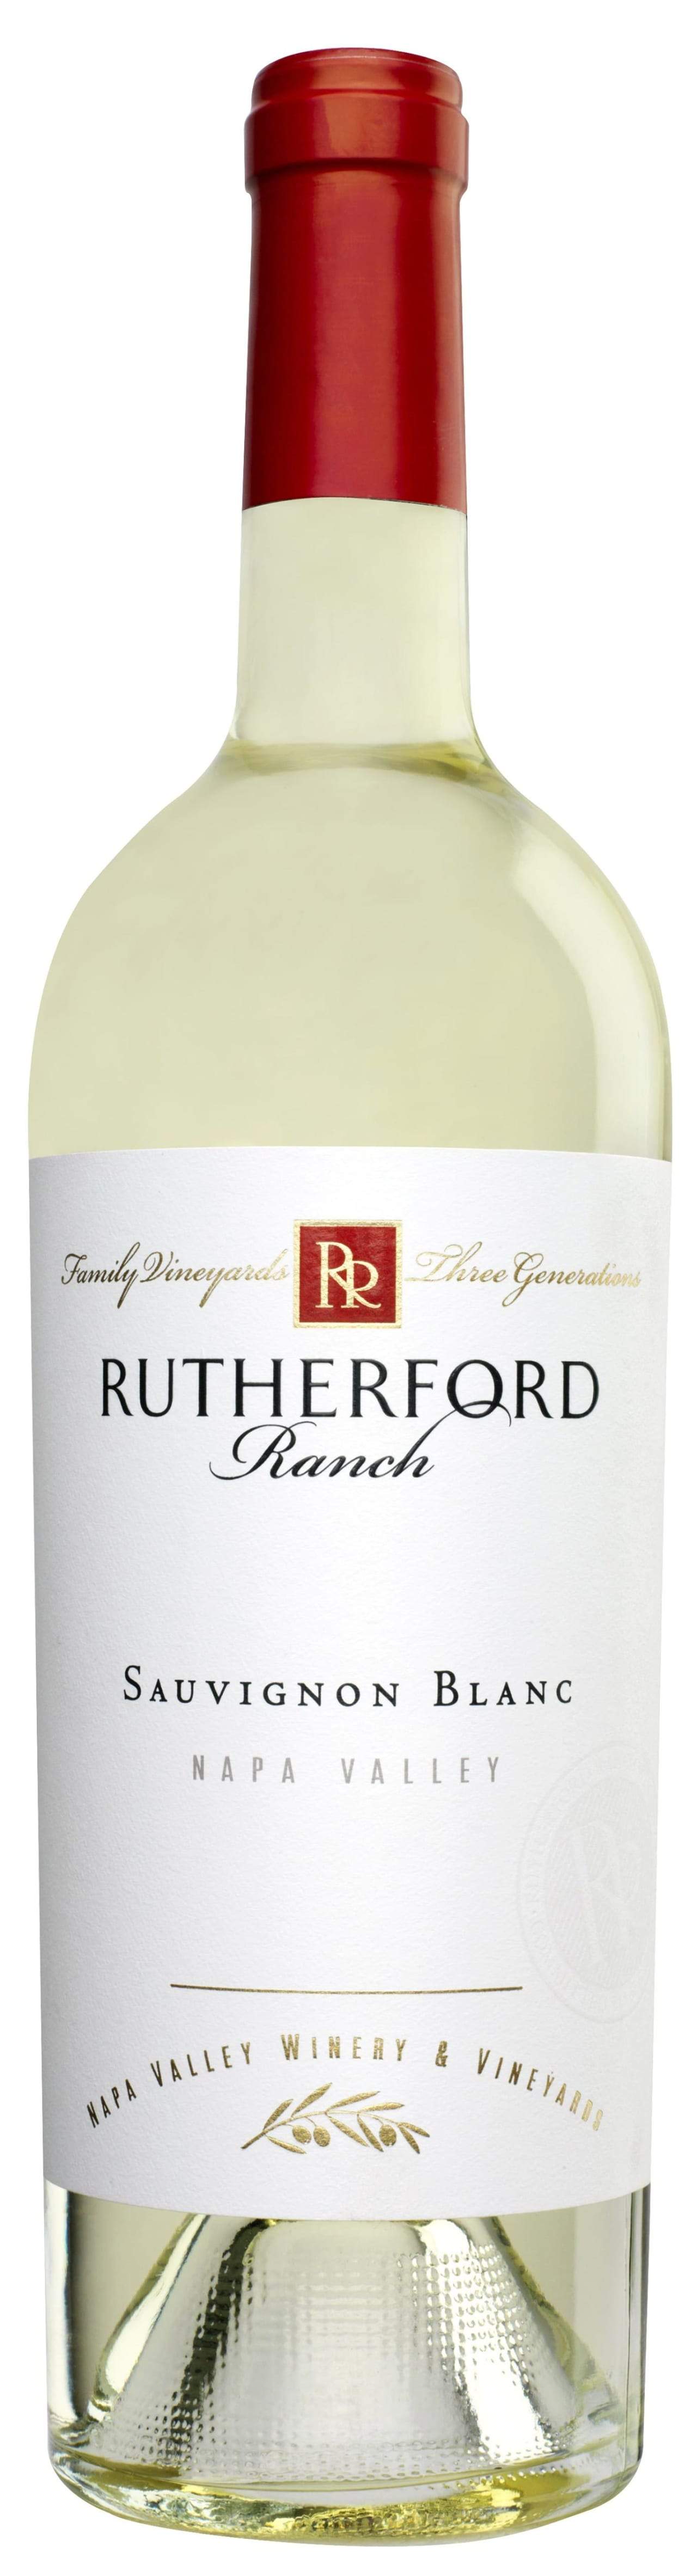 Rutherford Ranch Sauvignon Blanc 2018